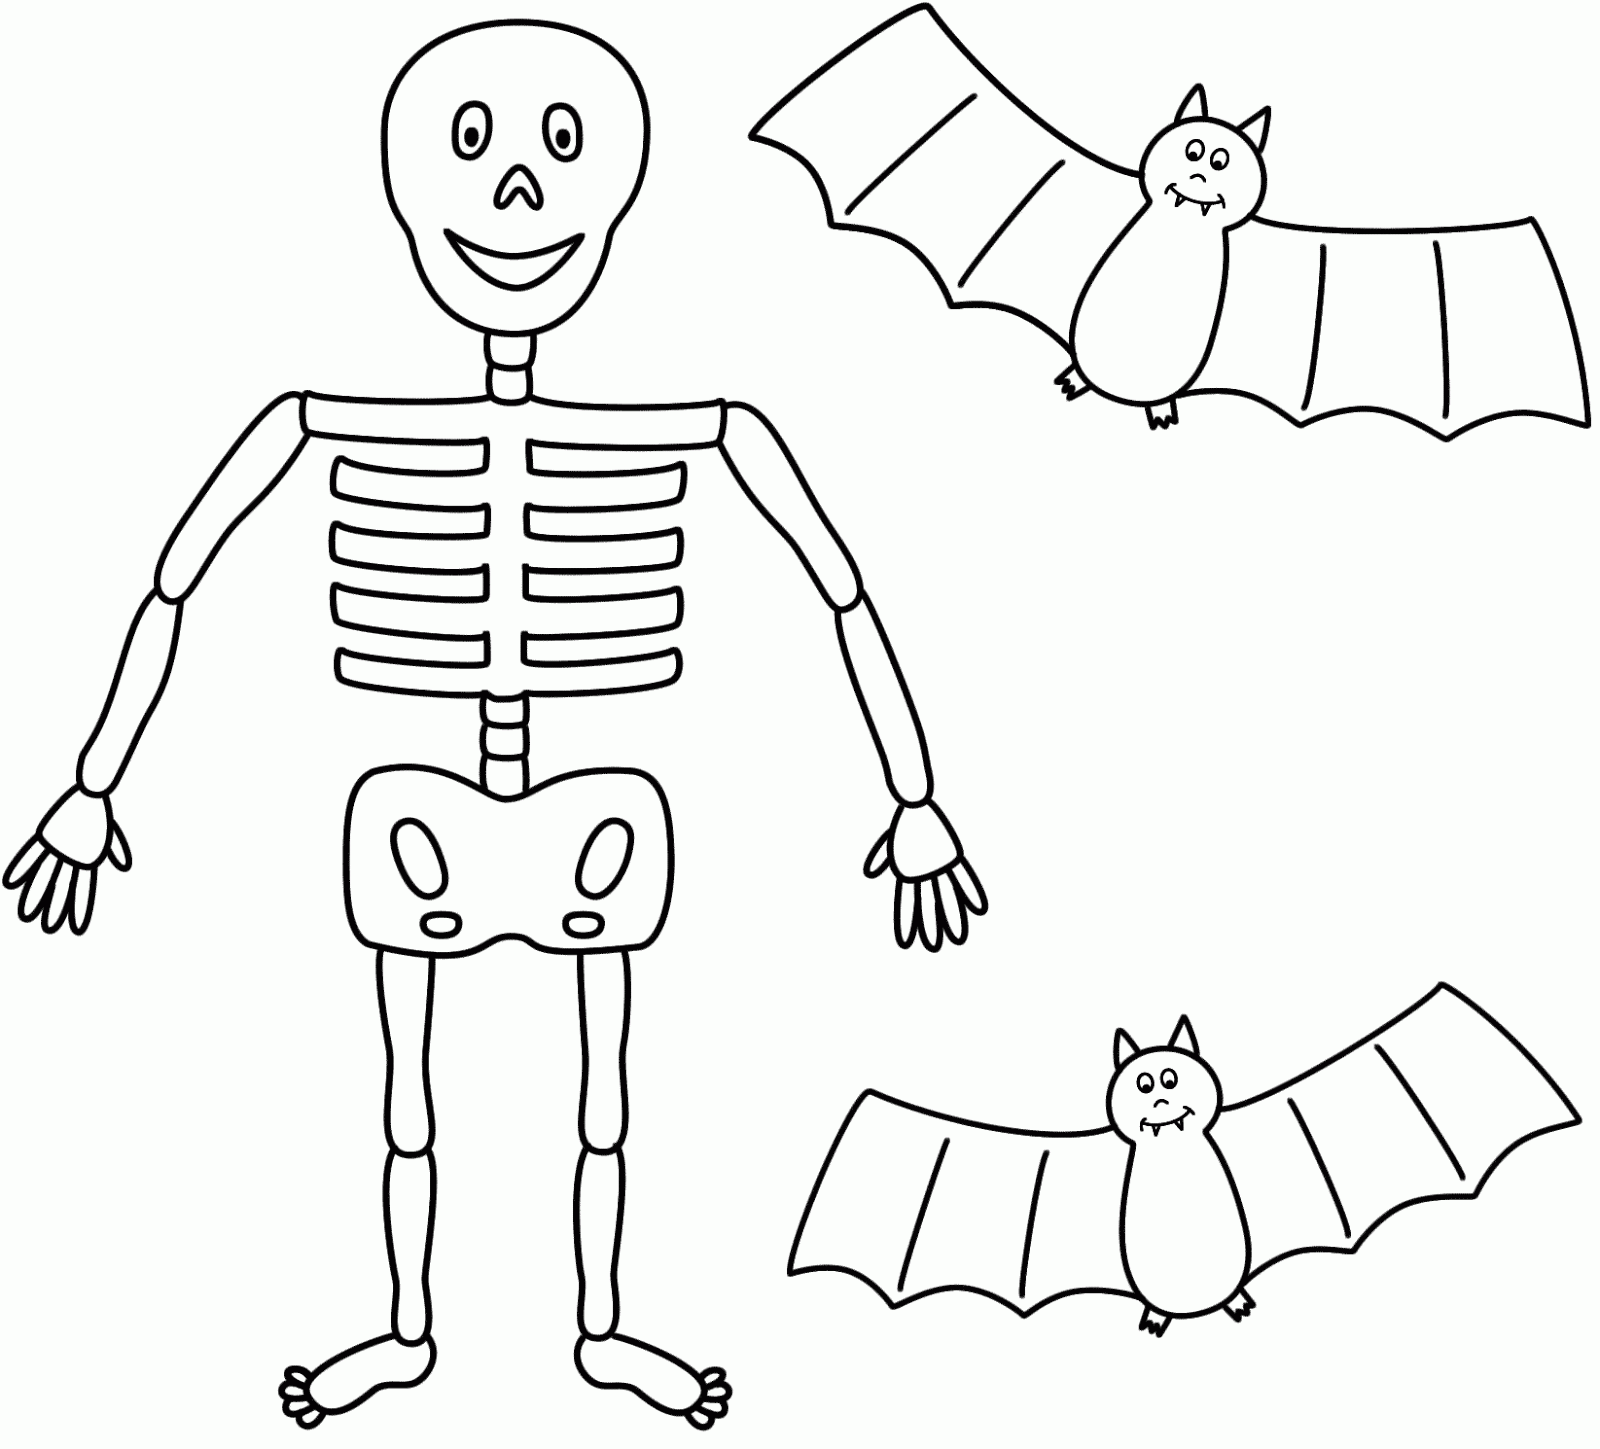 Skeleton Drawing For Kids - Gallery